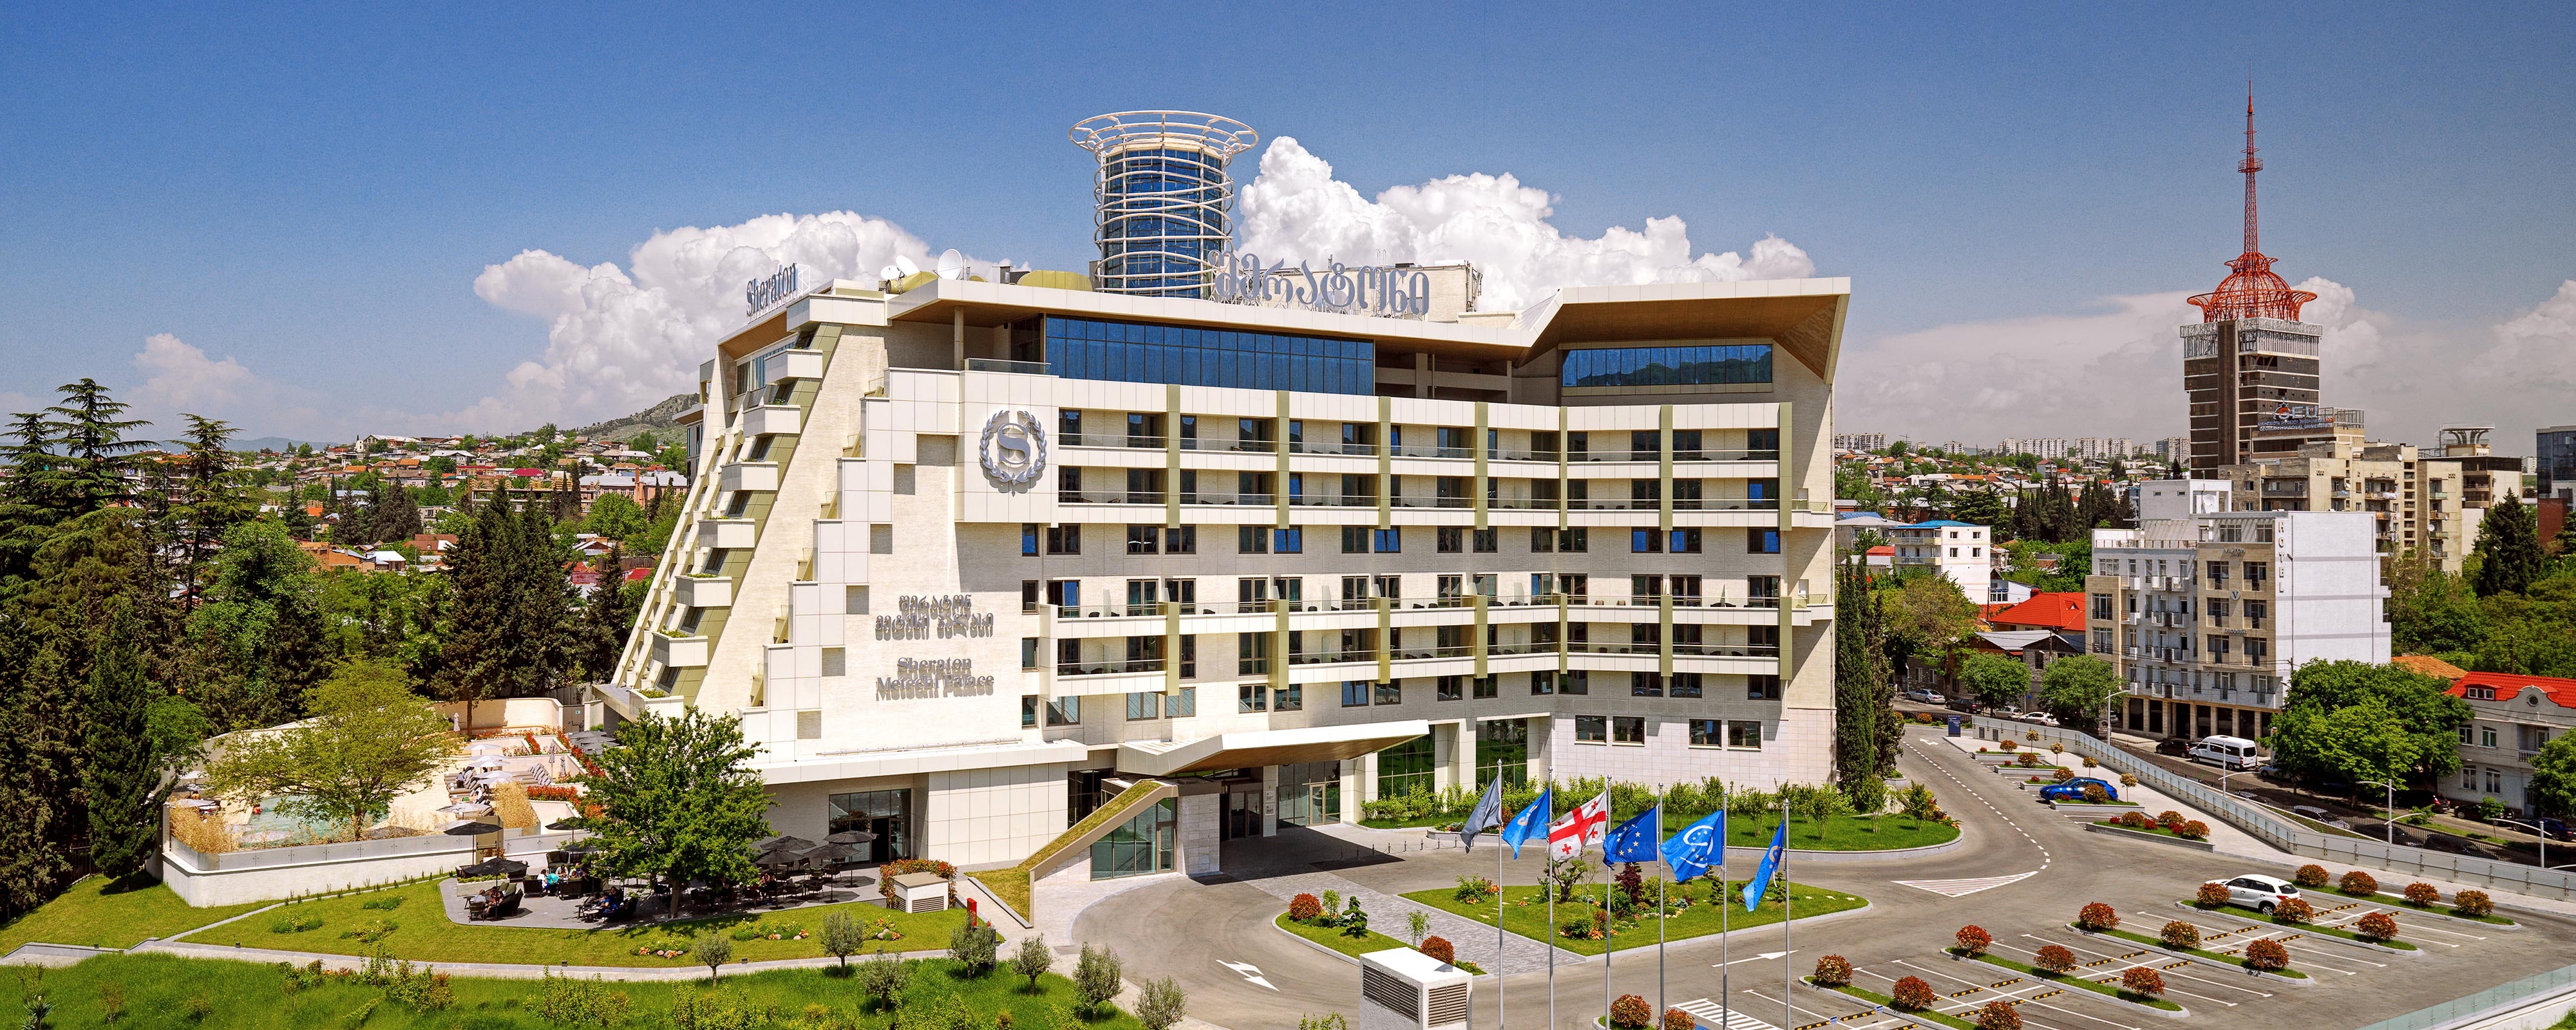 tbilisi tourism hotels